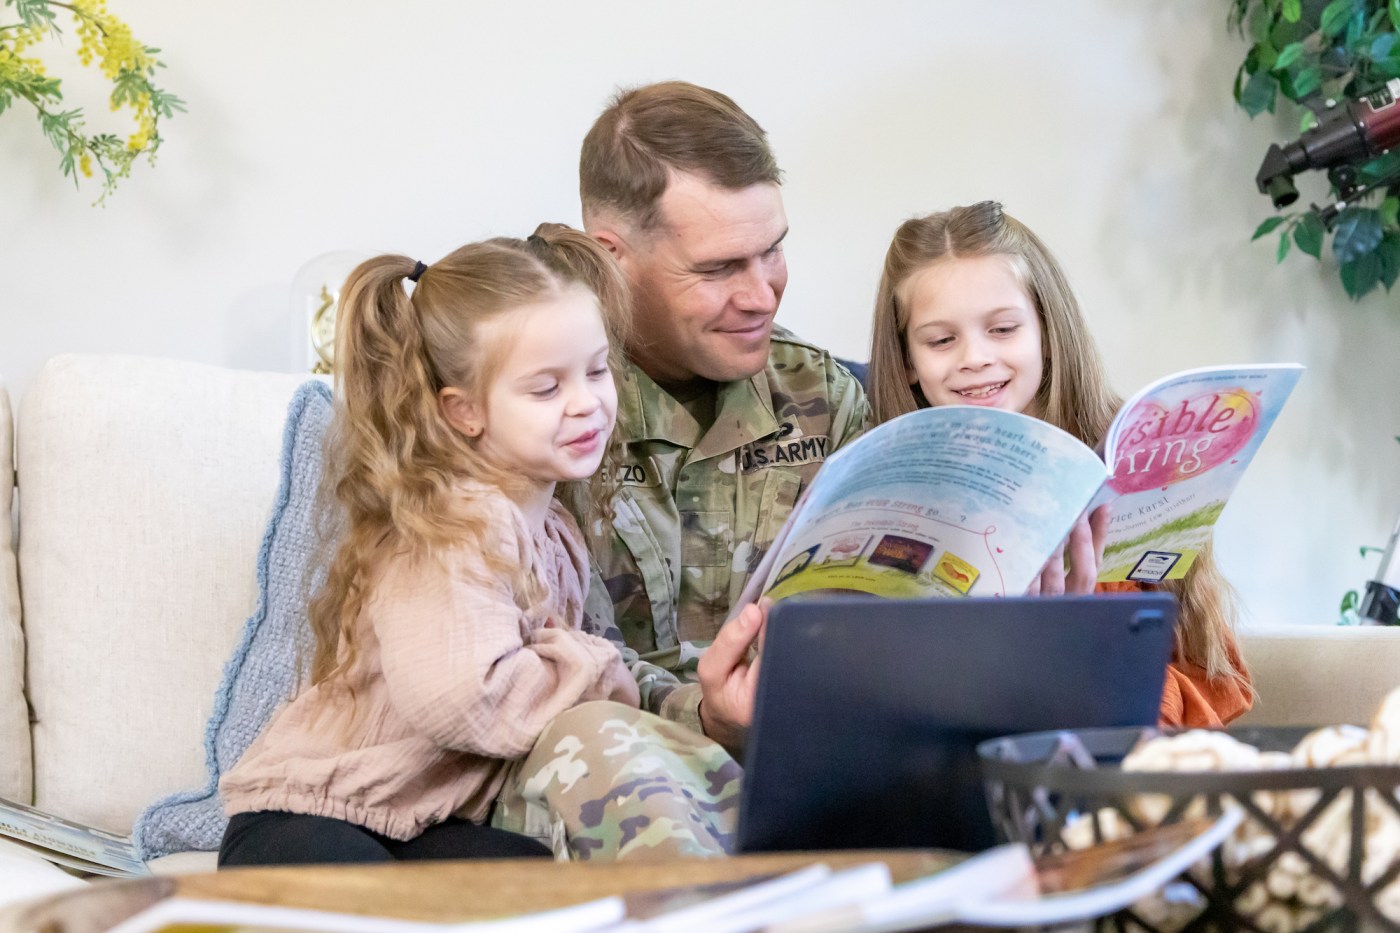 Reading program aims to unite military, Veteran families through shared experiences